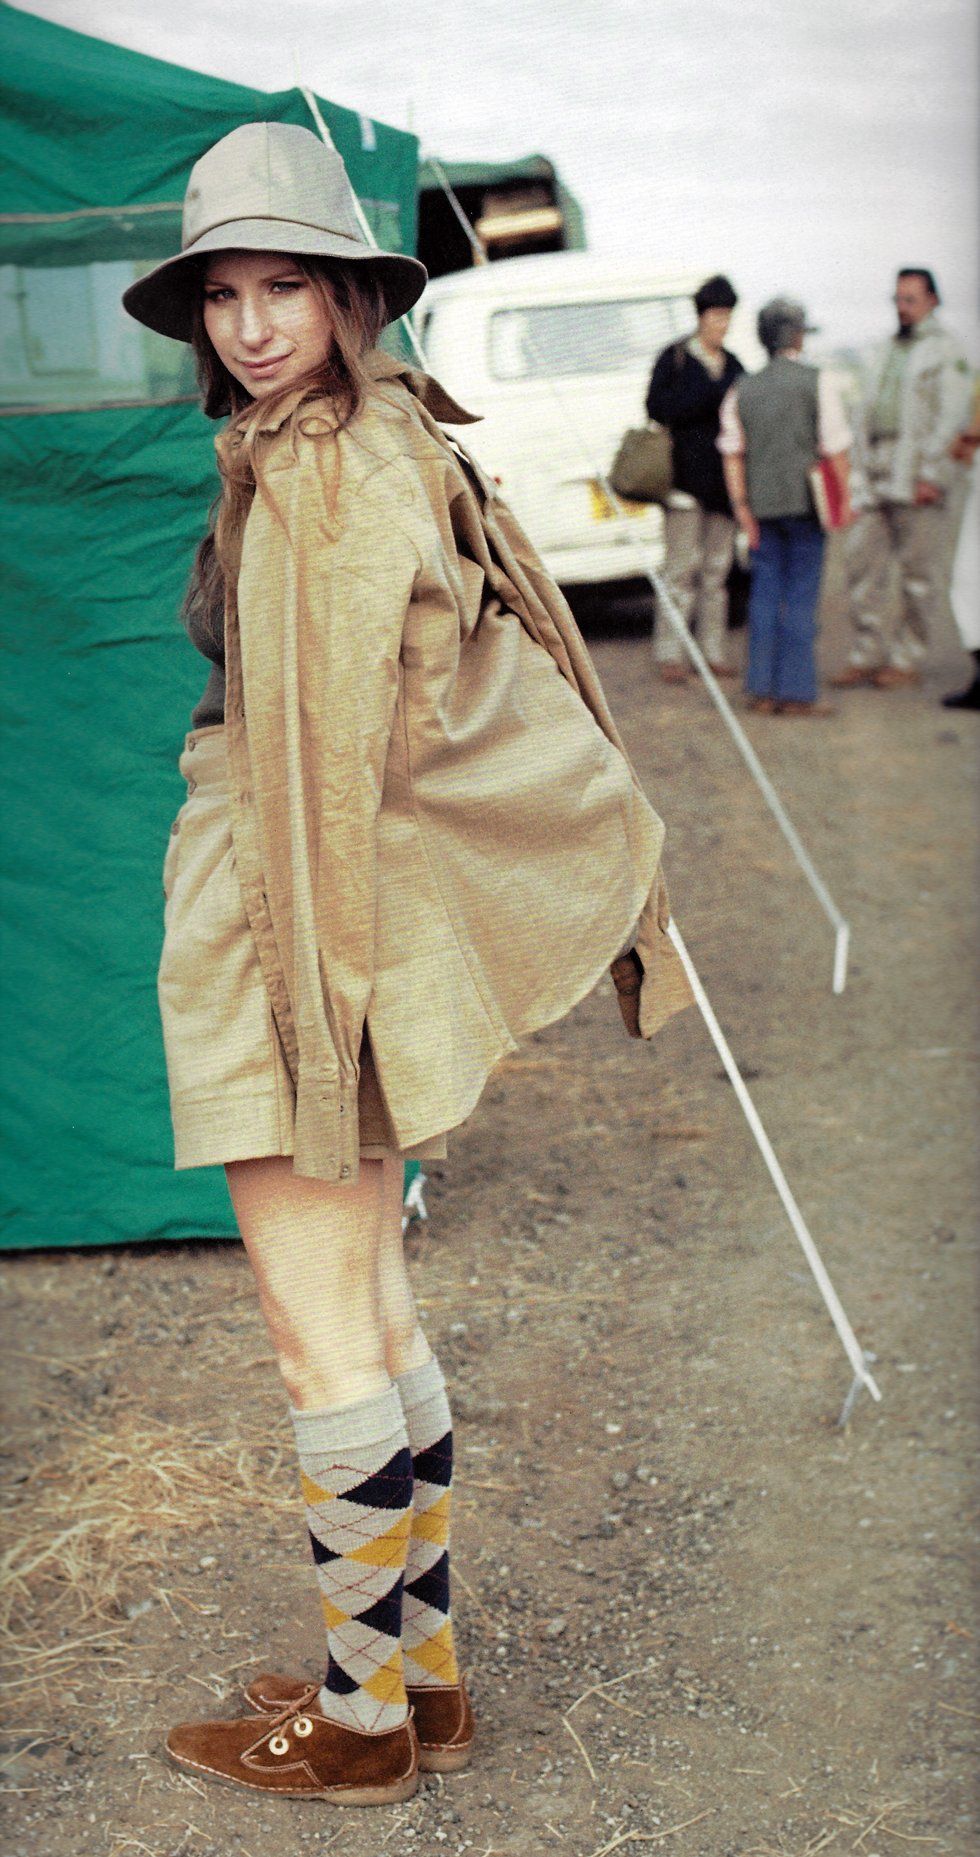 Streisand on location in Africa in 1972.